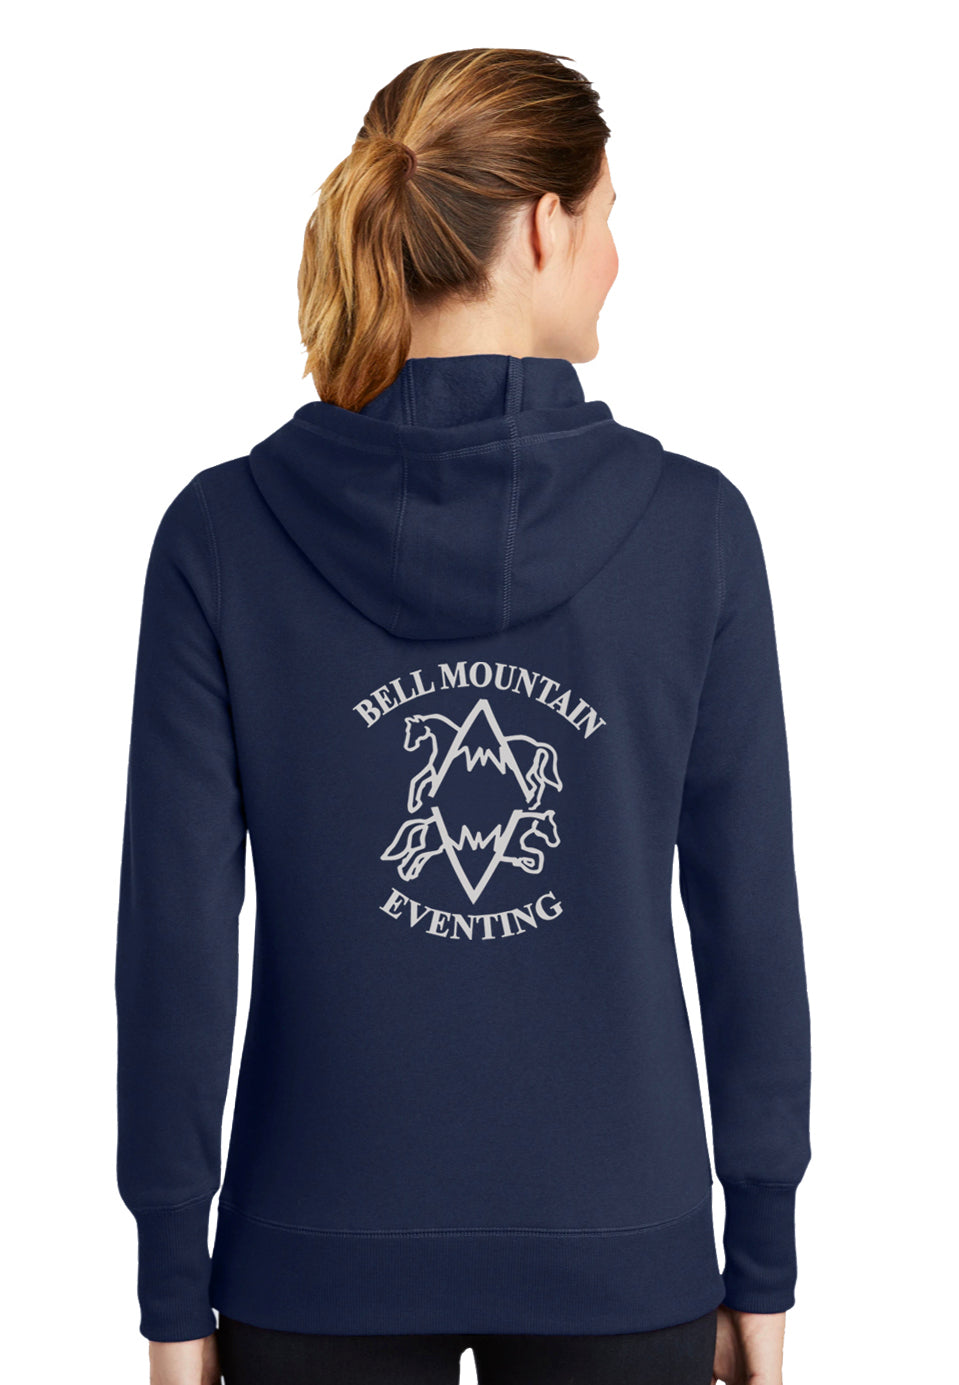 Bell Mountain Eventing Sport-Tek®  Hooded Sweatshirt - Ladies + Youth Sizes